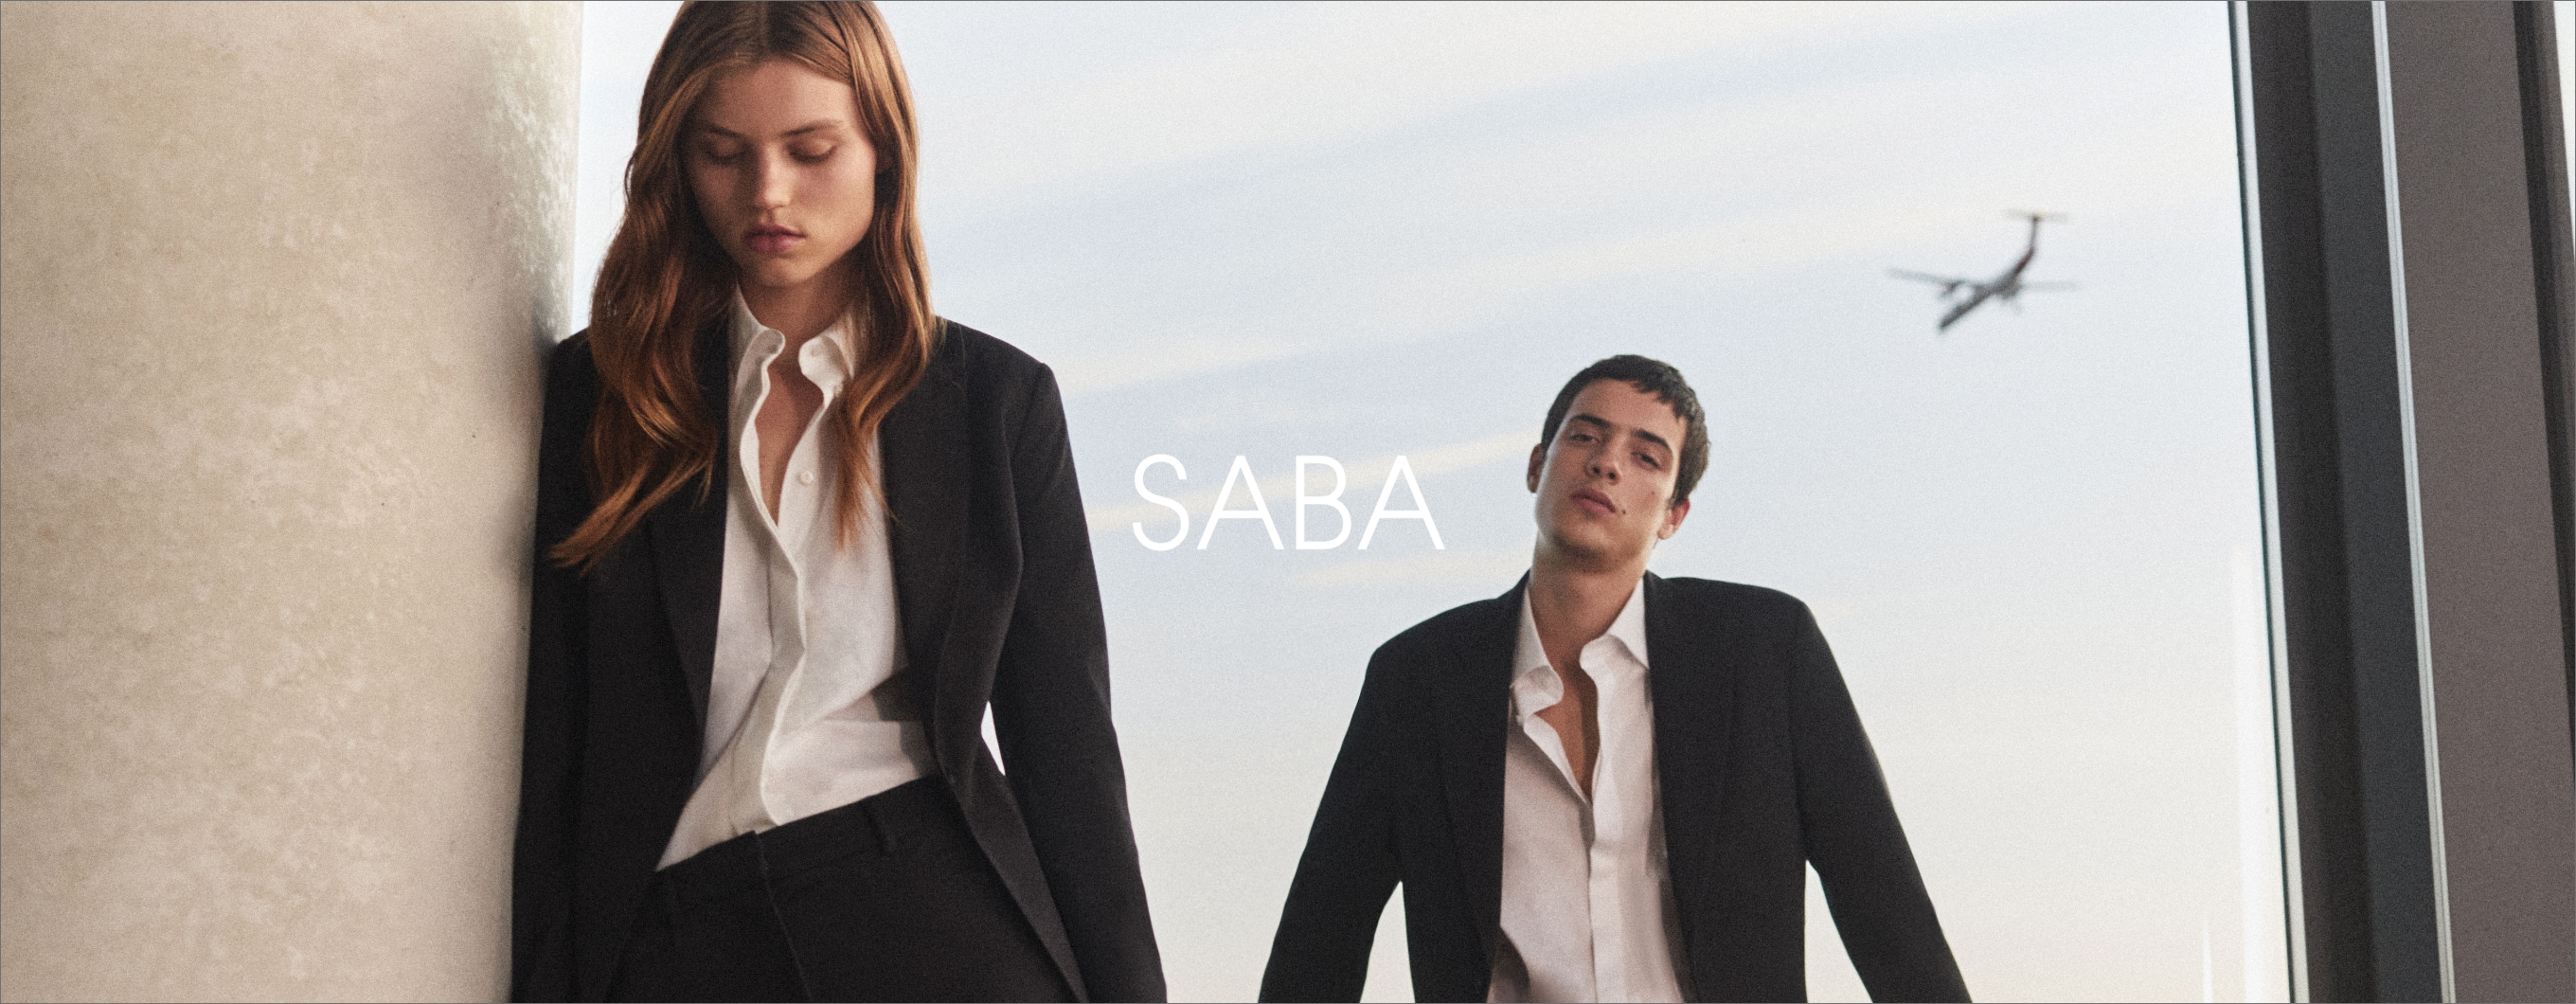 Saba workwear